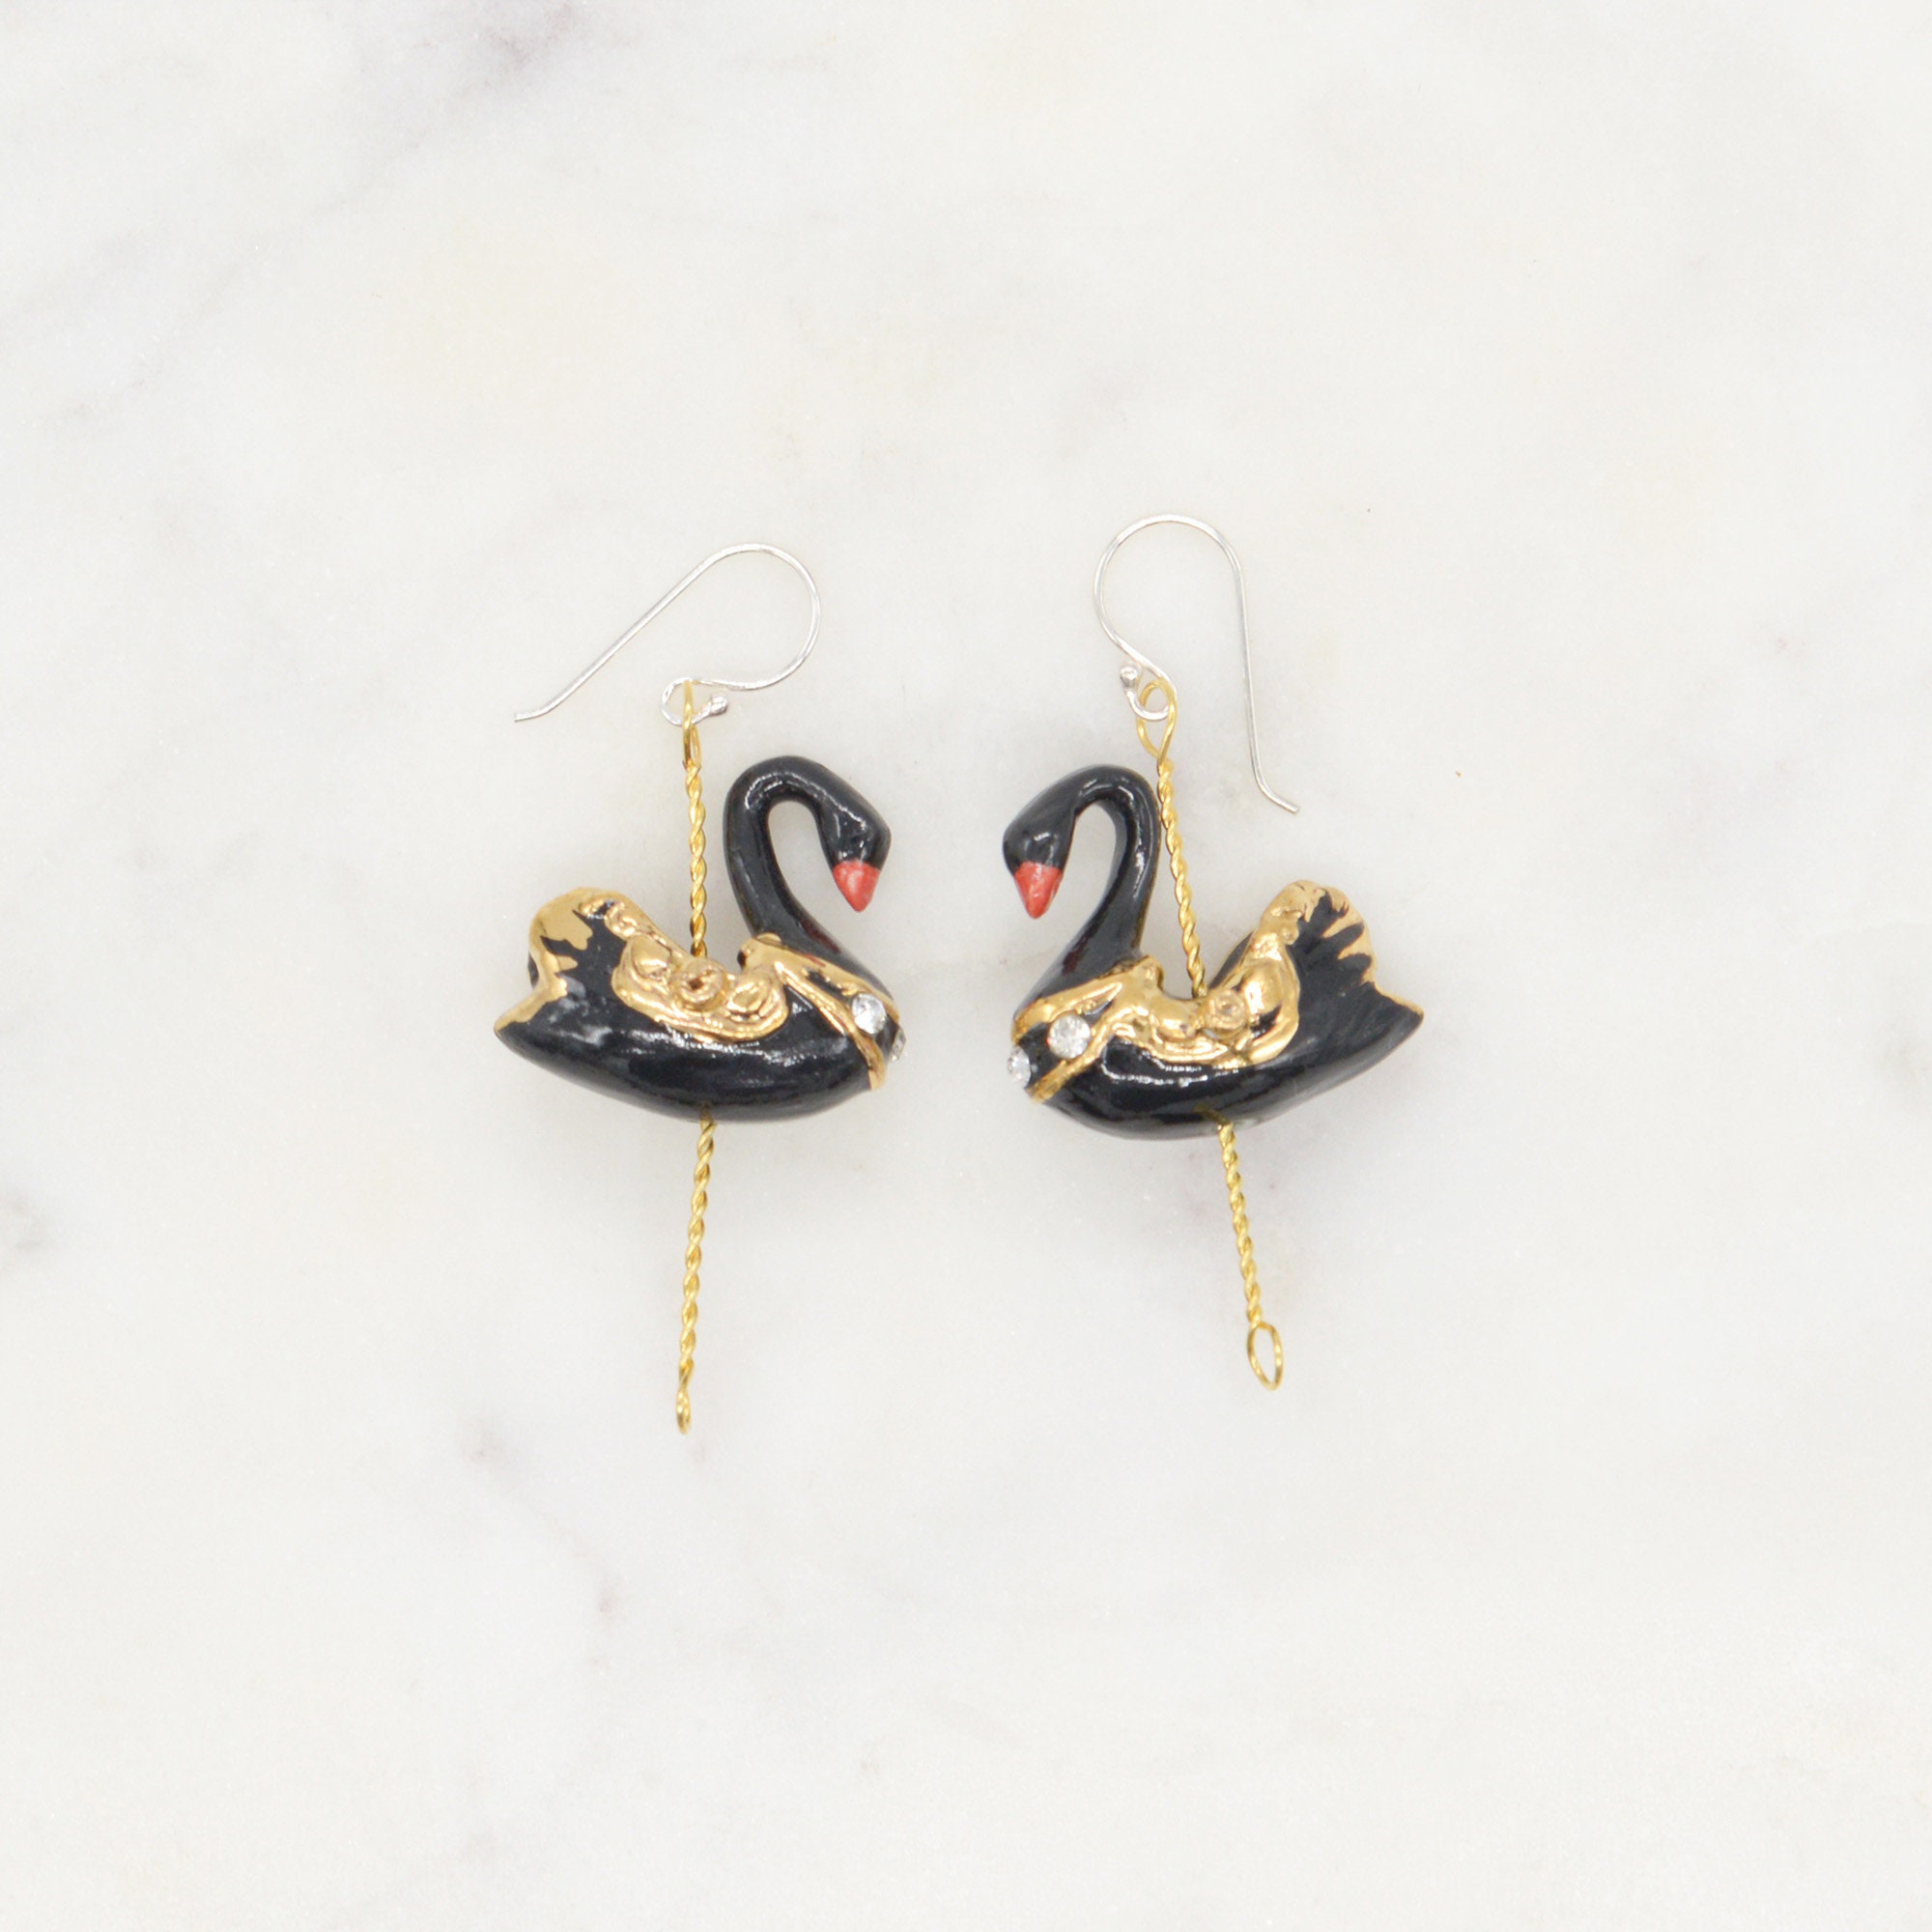 Jewelry | Black Swan Swarovski Elements Earrings Studs Crystals 3d New  Sparkly | Poshmark